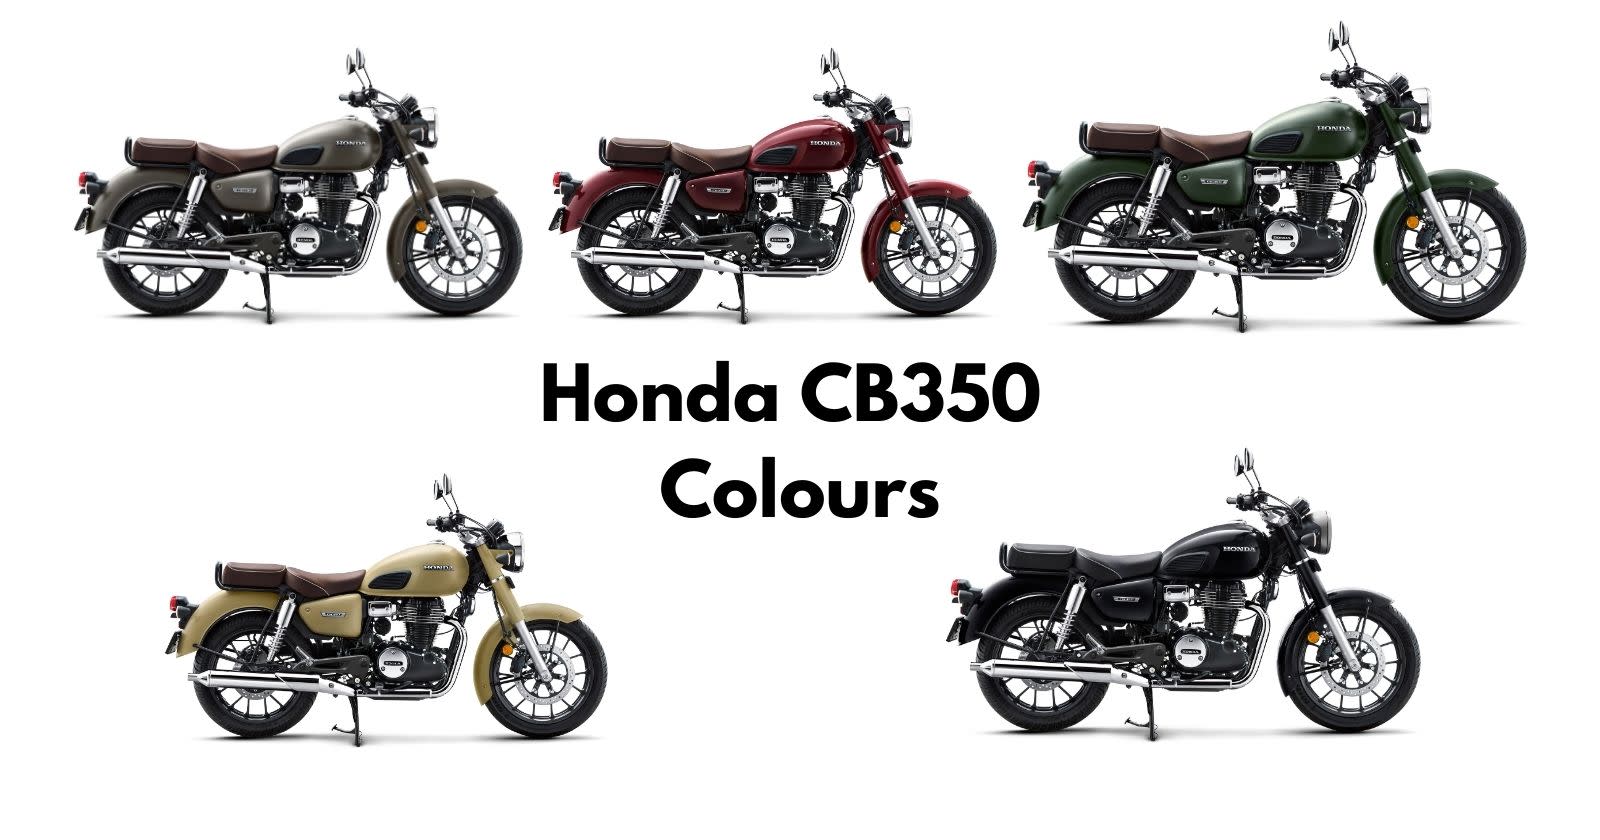 Honda CB350 colours